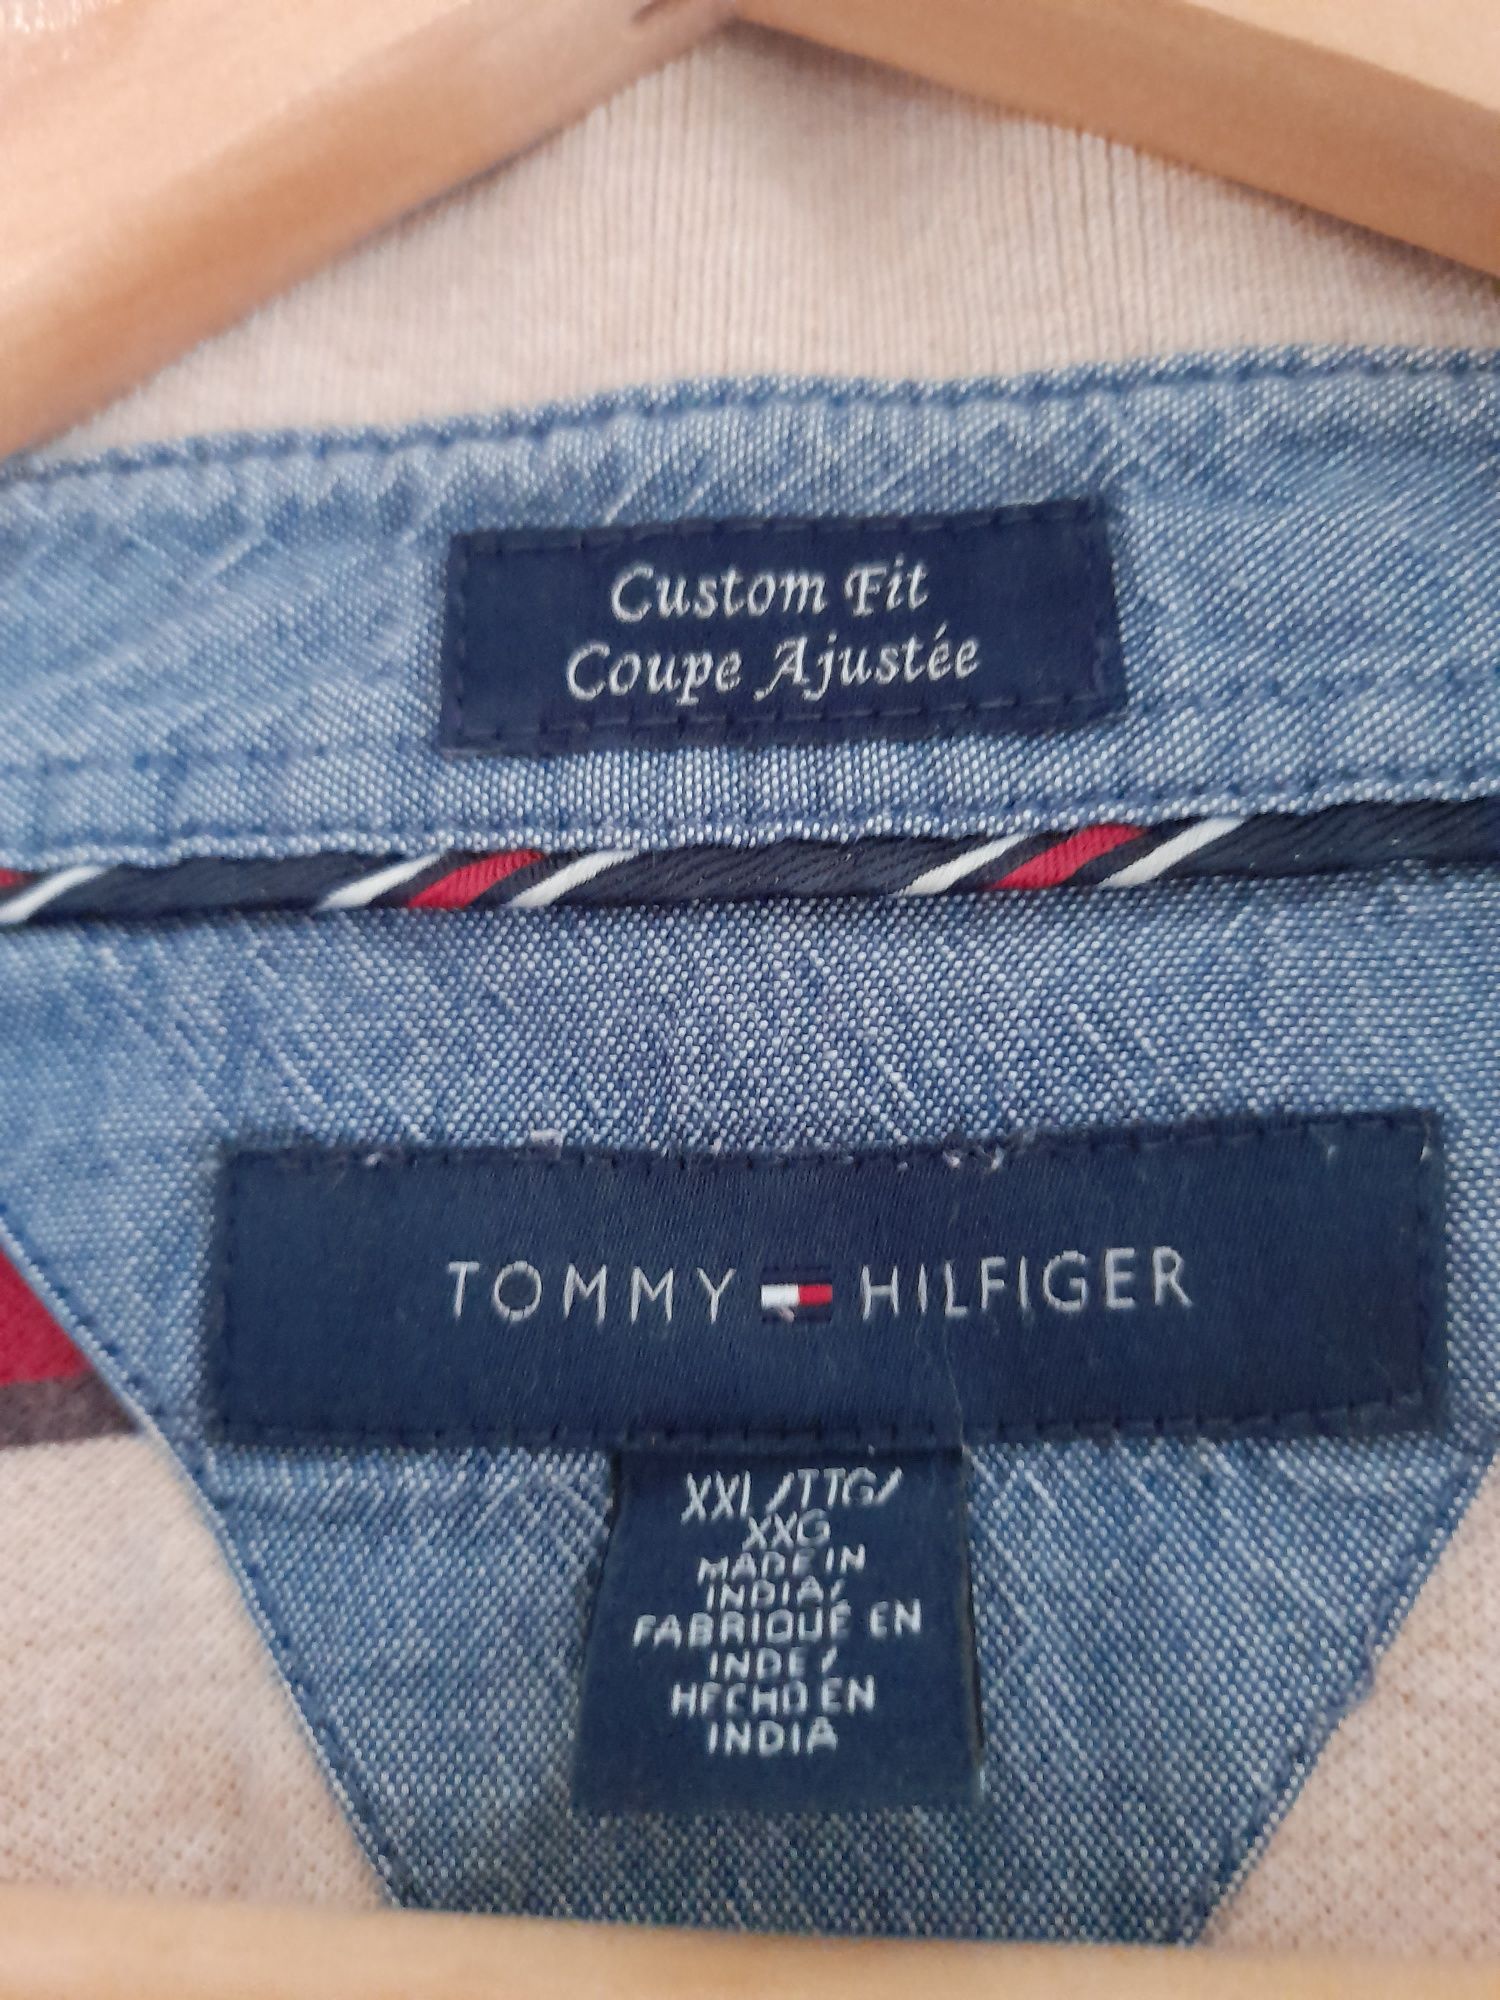 Tommy Hilfiger original, tricou barbati XXL, purtat dar în state bună.